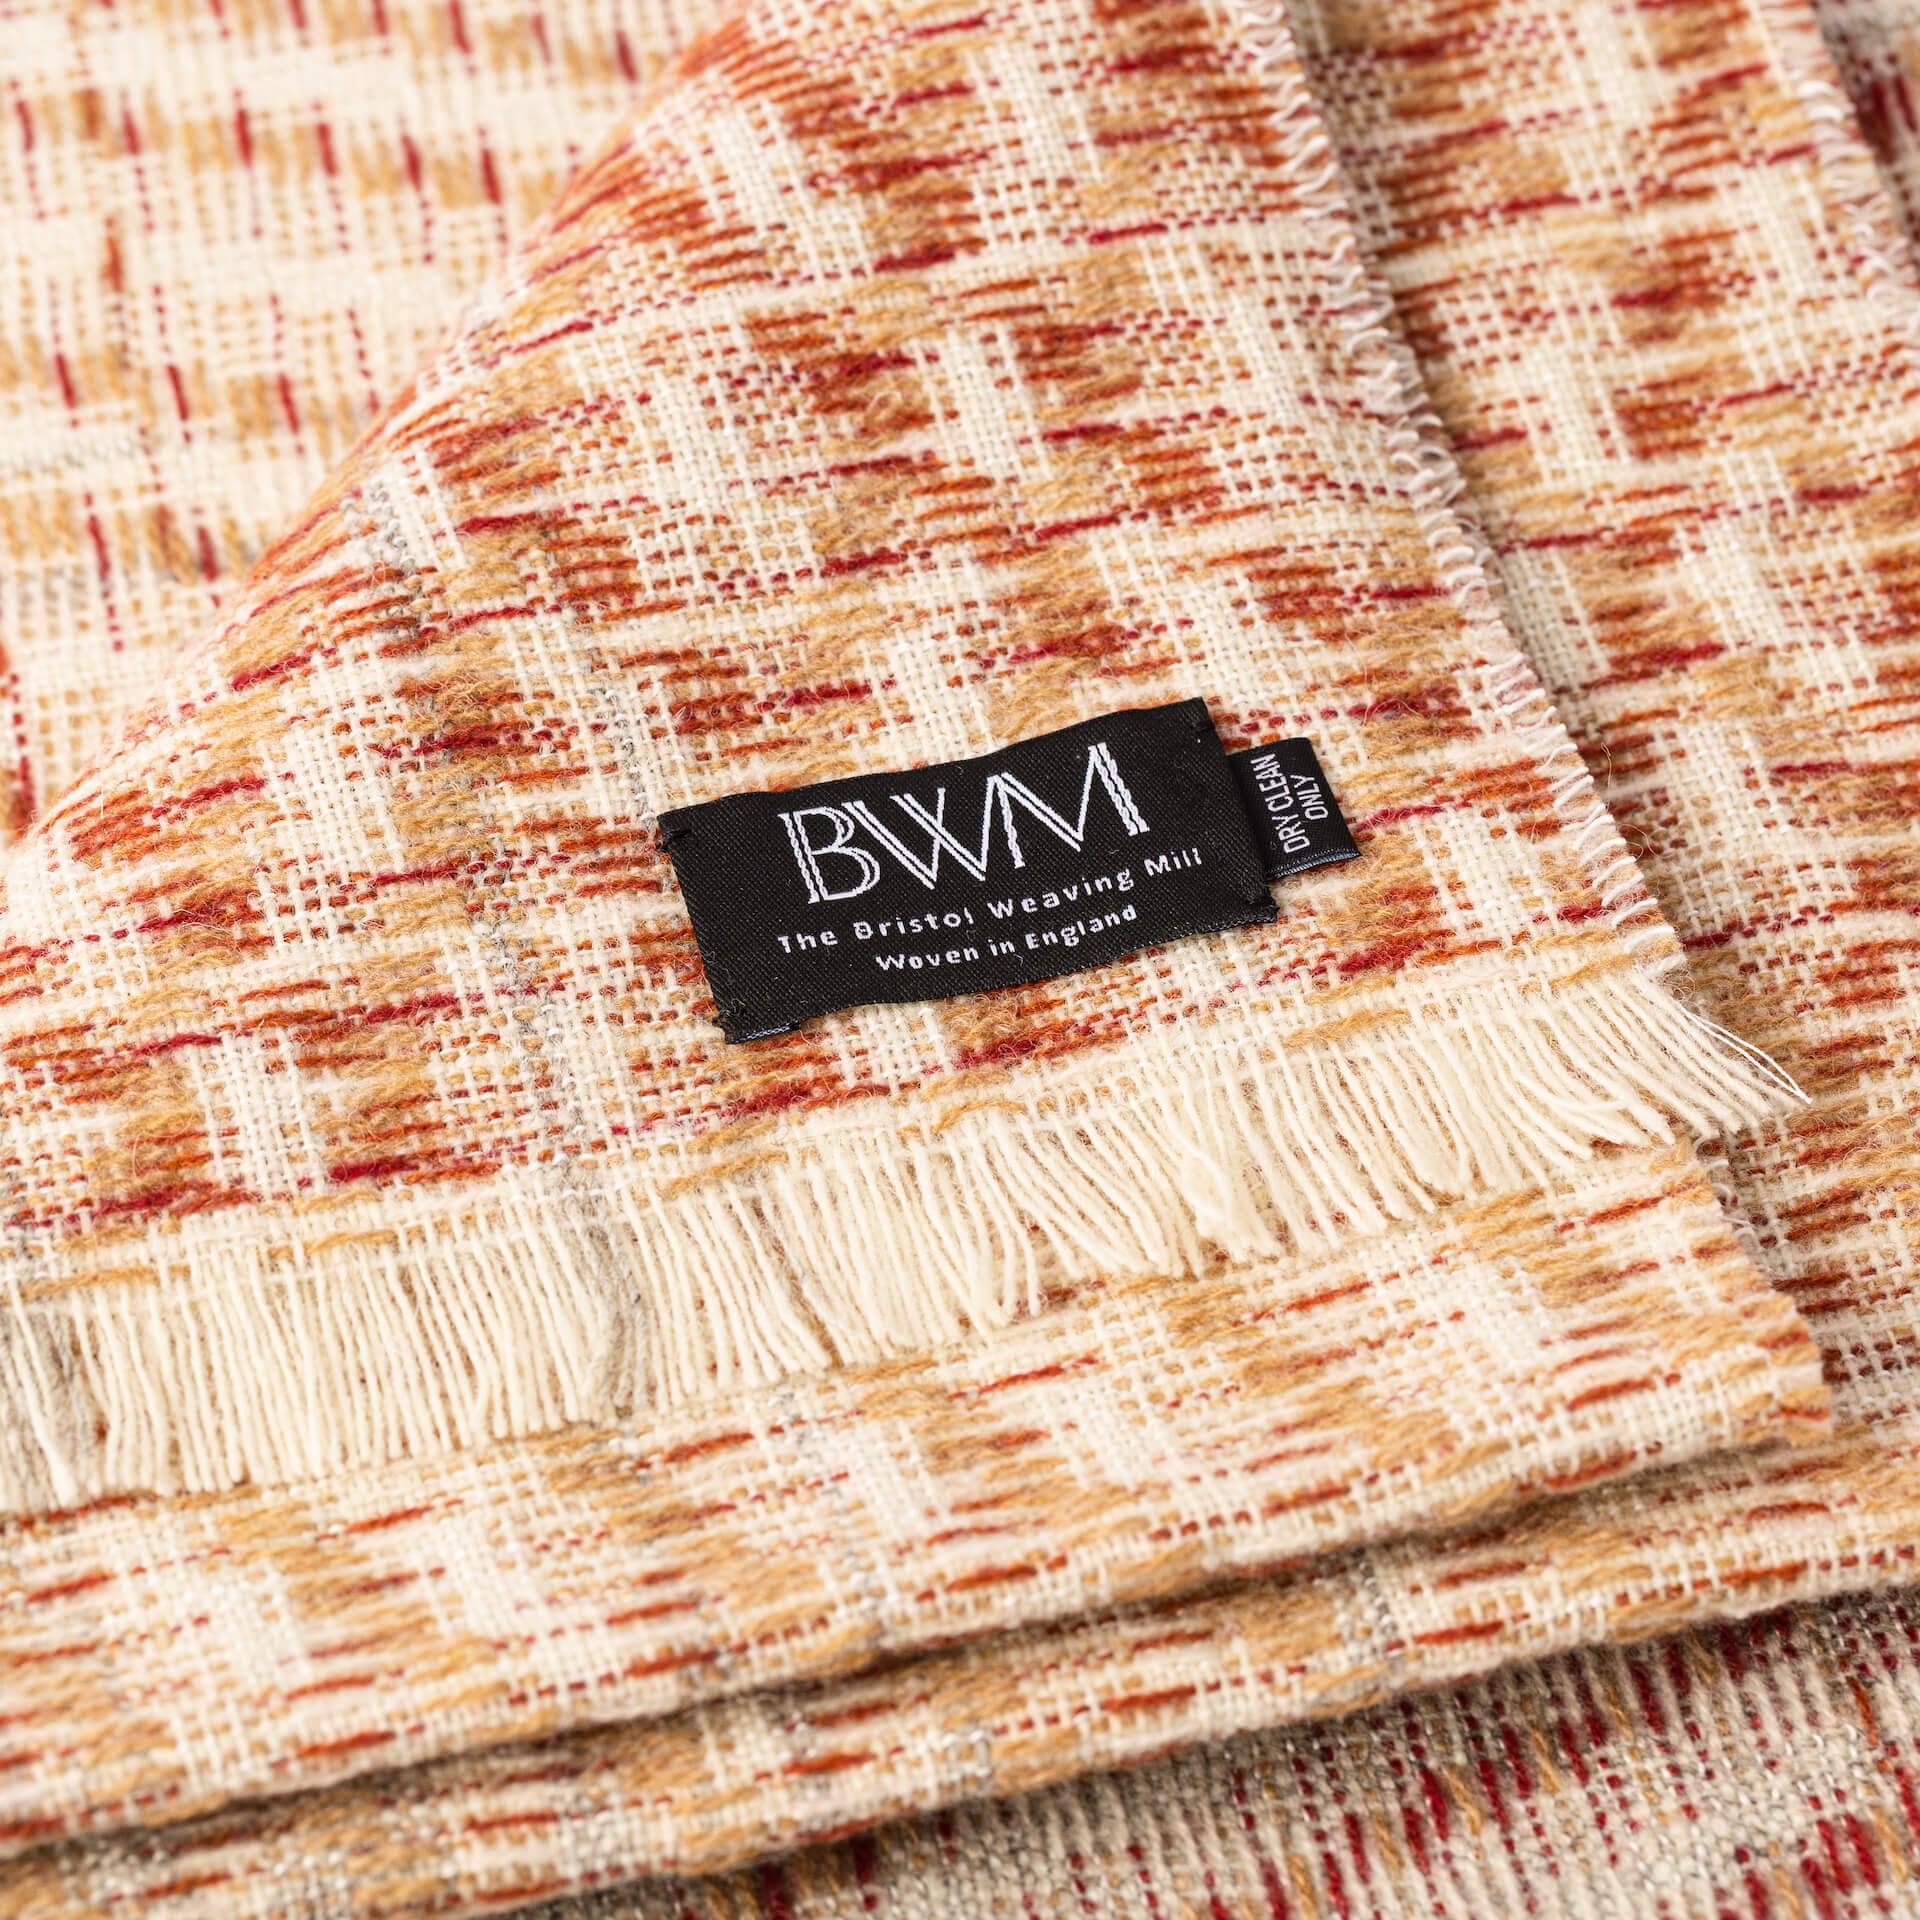 Bristol Weaving Mill Limited-edition Luxury Hand-woven Blanket - 'Maroon & Camel'